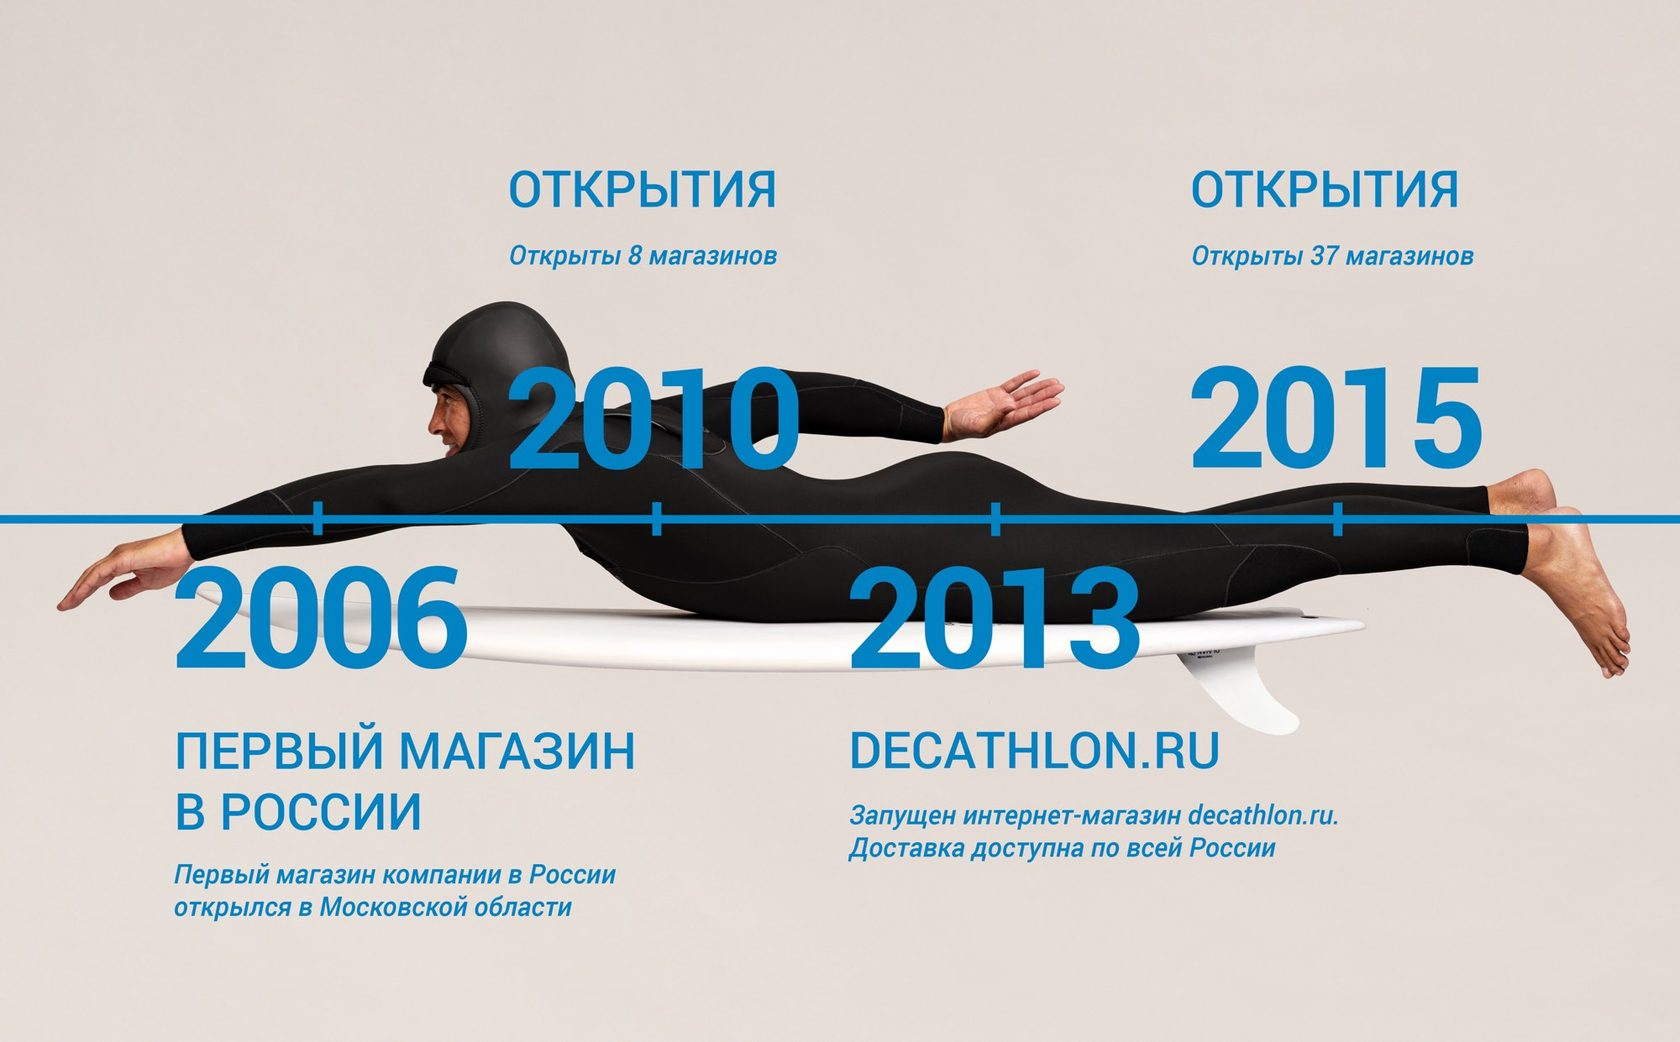 Decathlon Ru Интернет Магазин